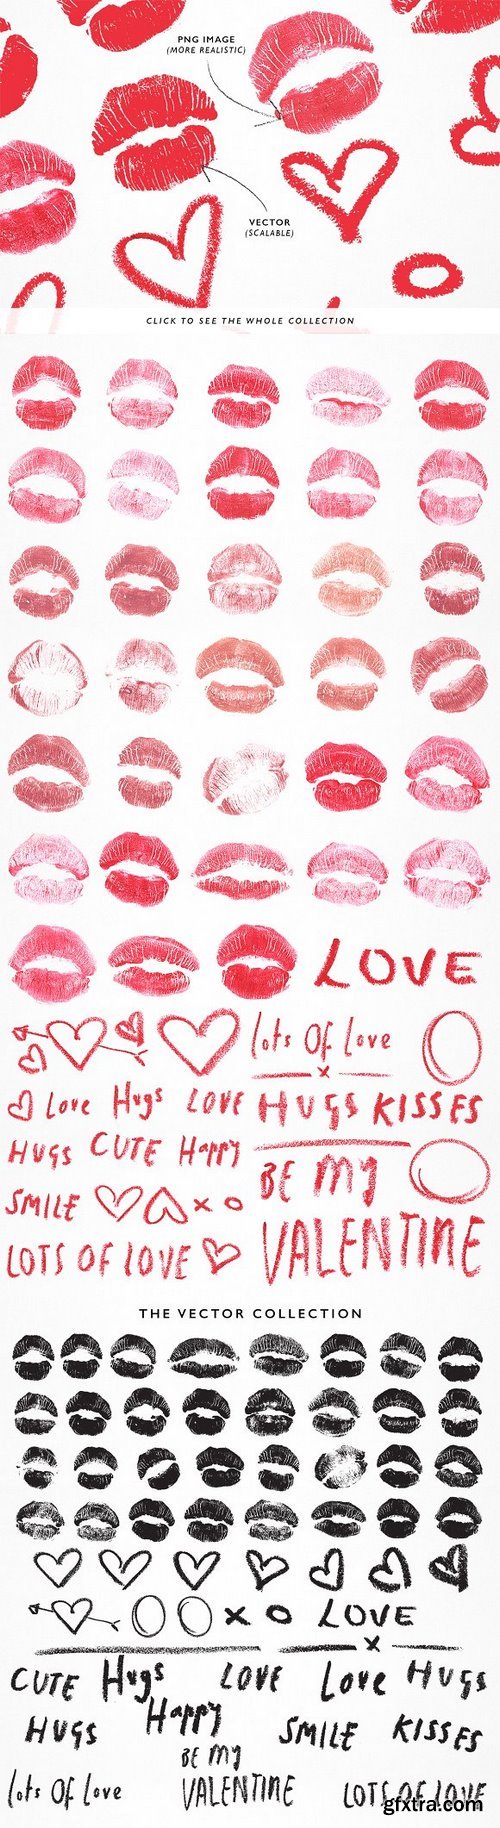 CM - The Valentine's Lipstick Pack 1155498